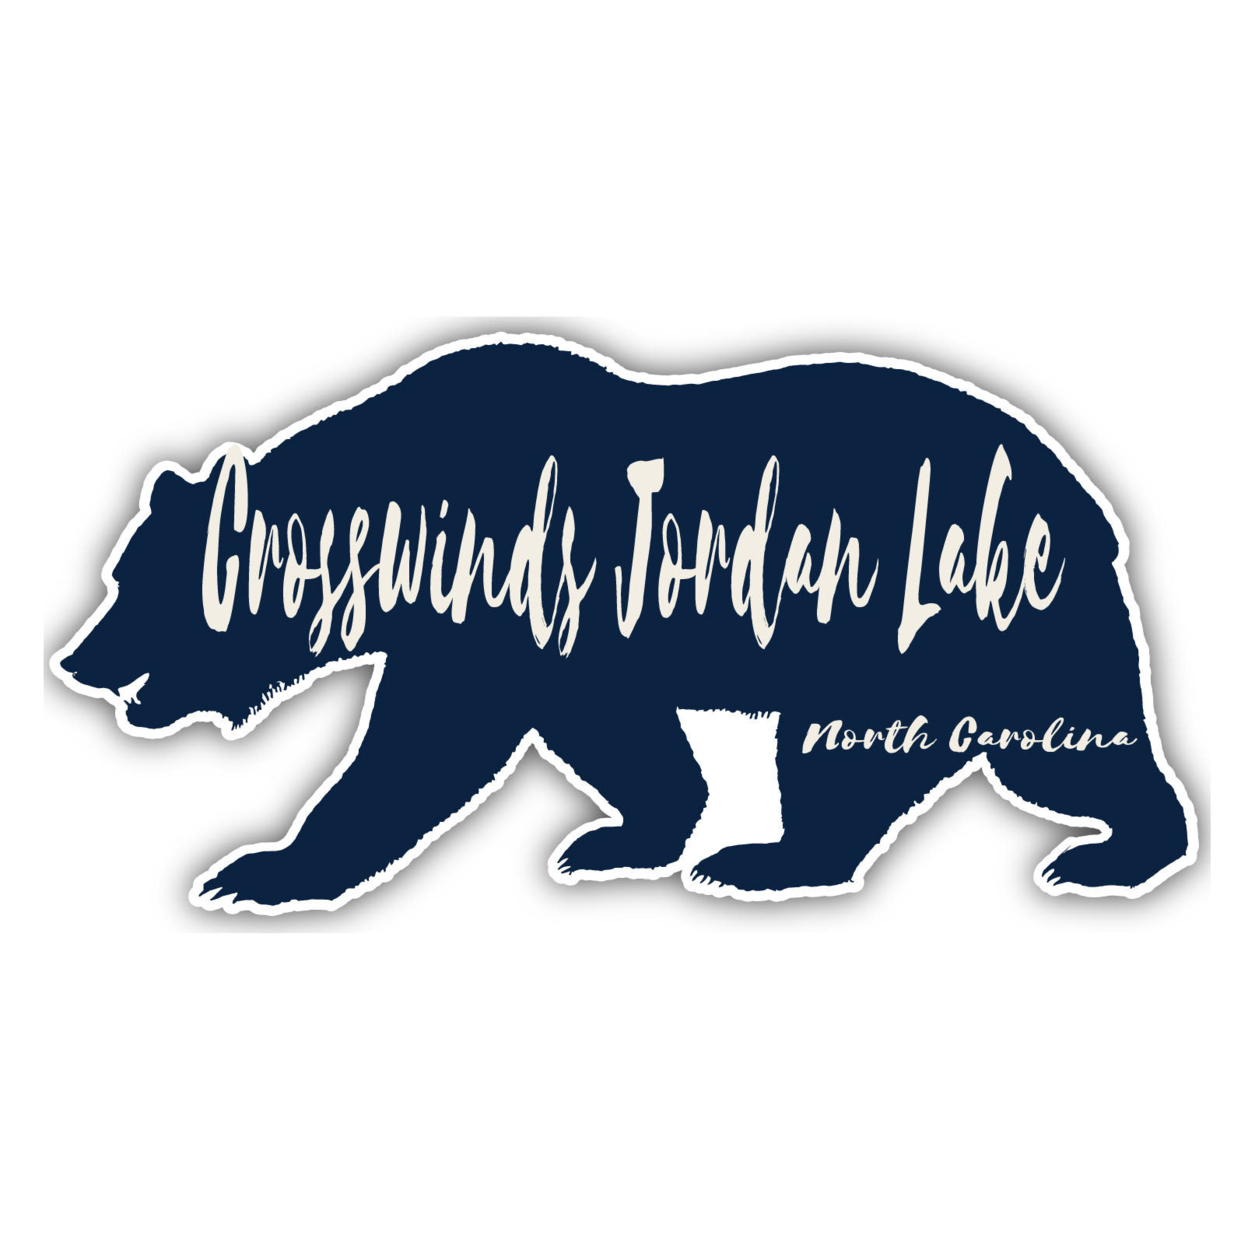 Crosswinds Jordan Lake North Carolina Souvenir Decorative Stickers (Choose Theme And Size) - 4-Pack, 6-Inch, Bear